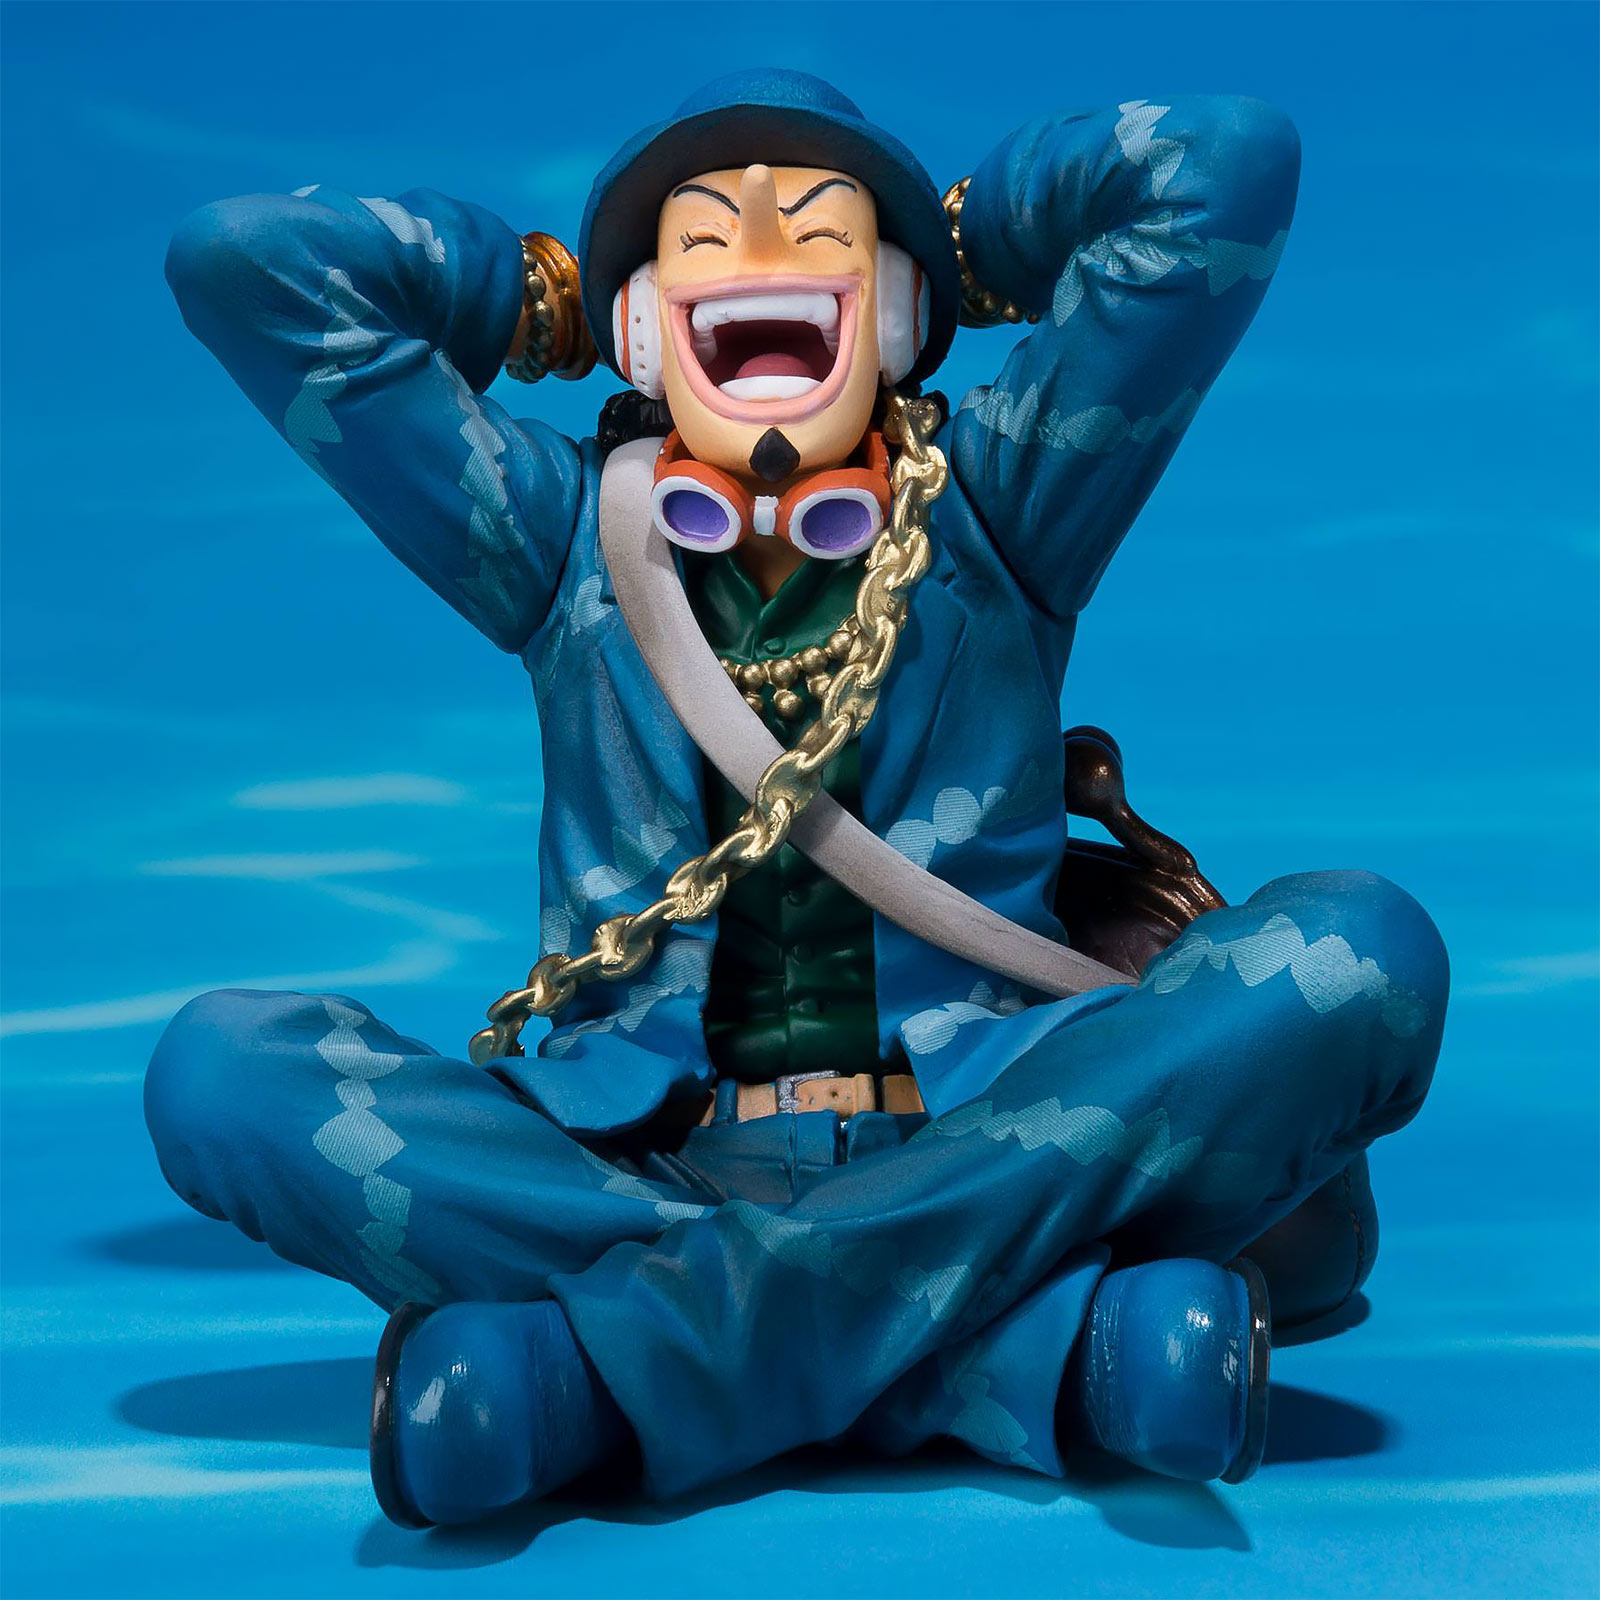 One Piece - Usopp 20th Anniversary Figur 7 cm